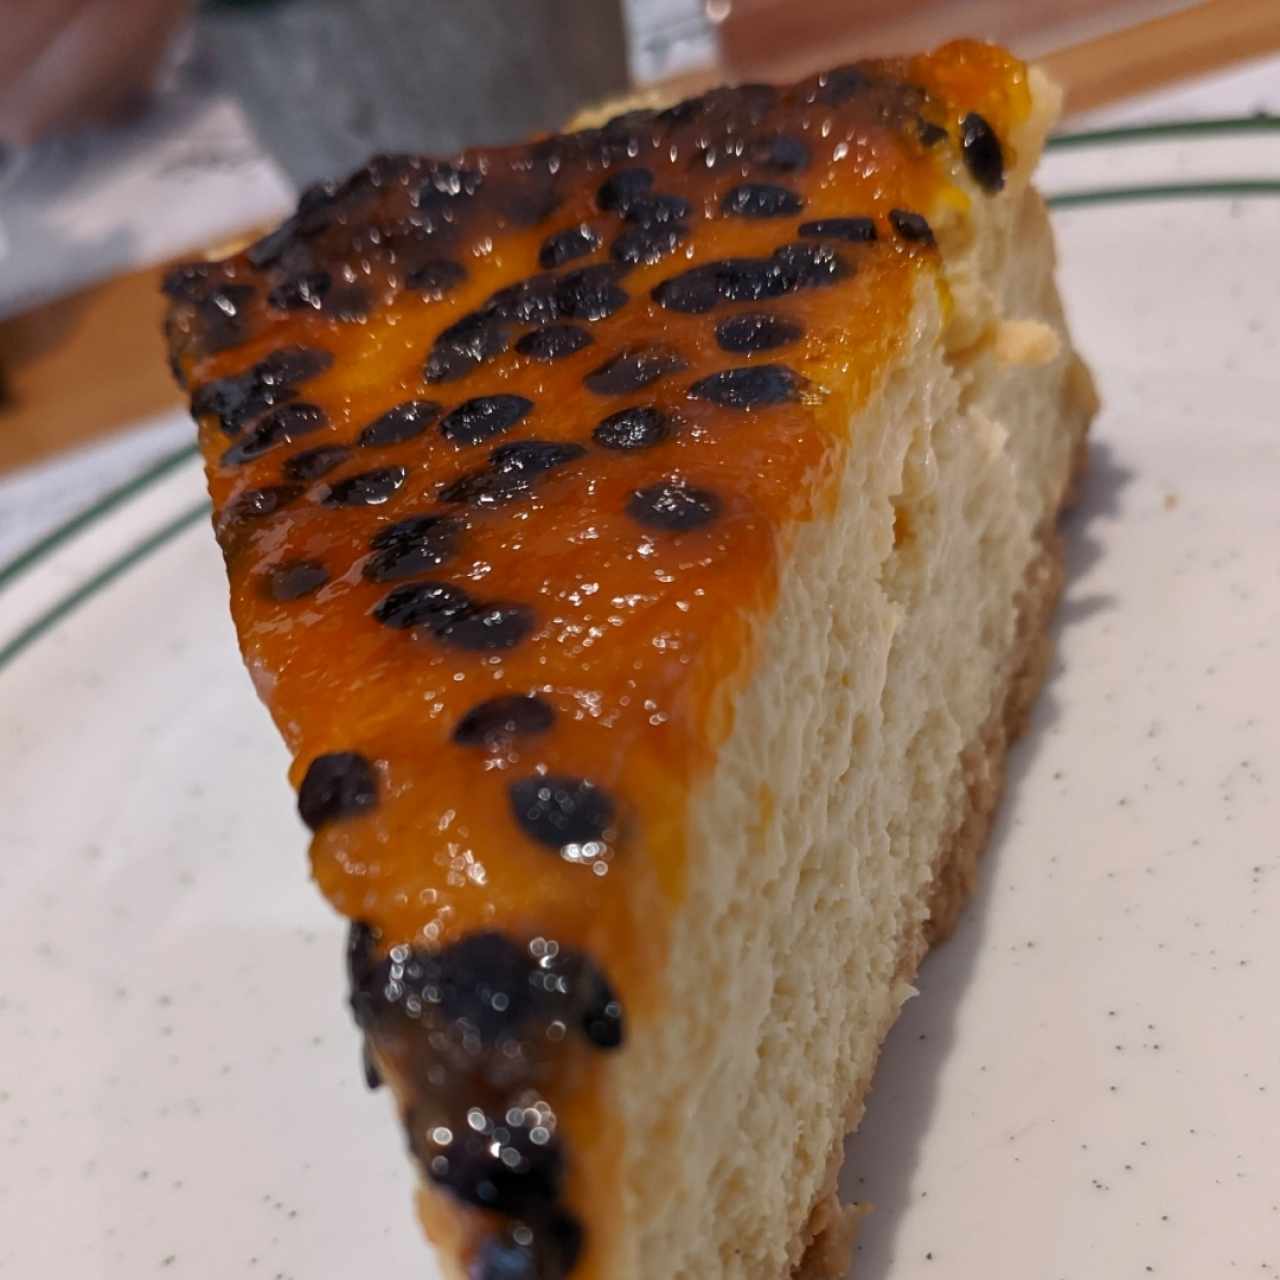 Cheesecake de Parchita